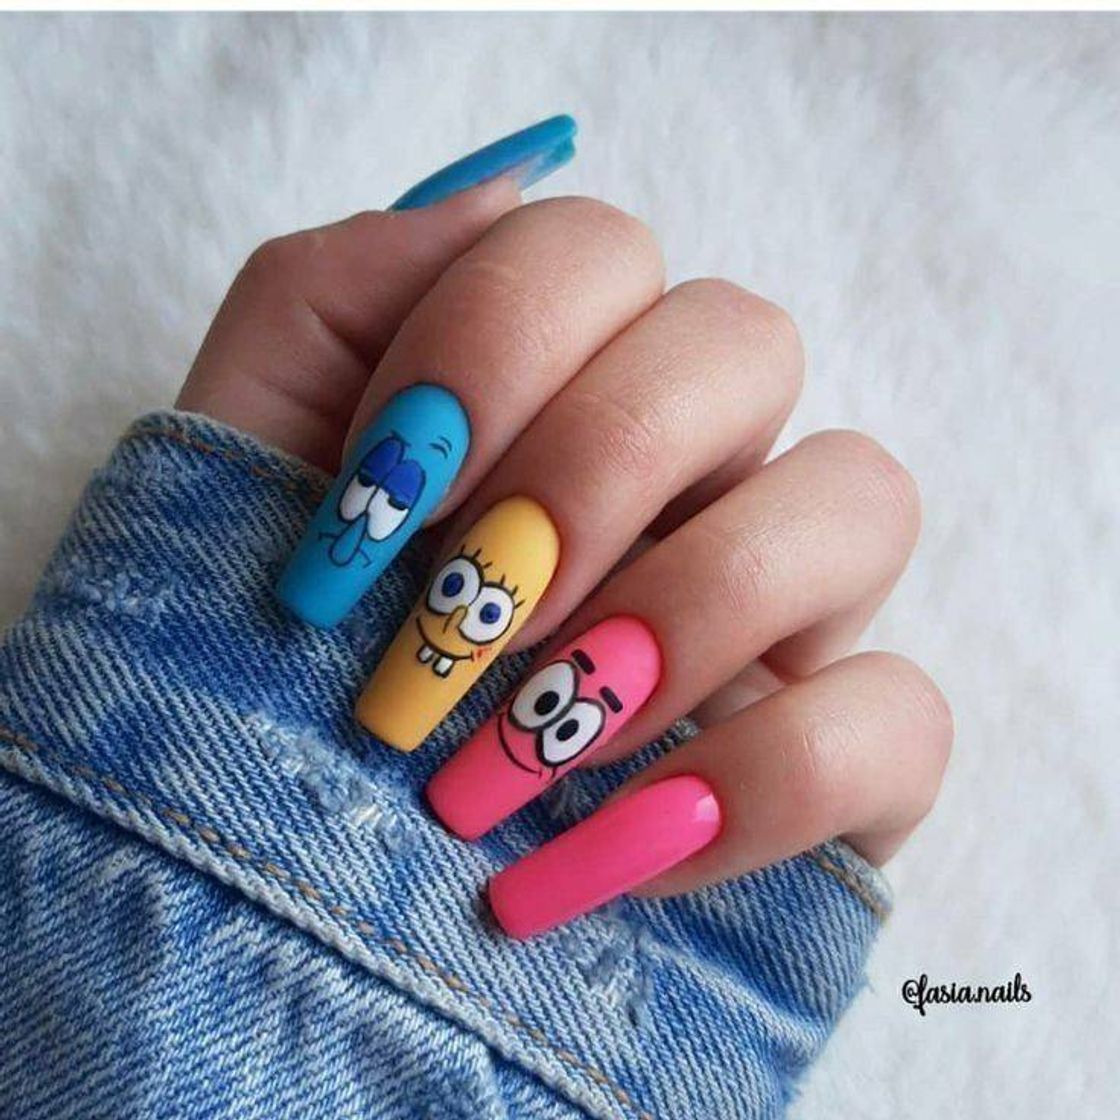 #nails #lulamolusco #bobesponja #patrick 💅❣️